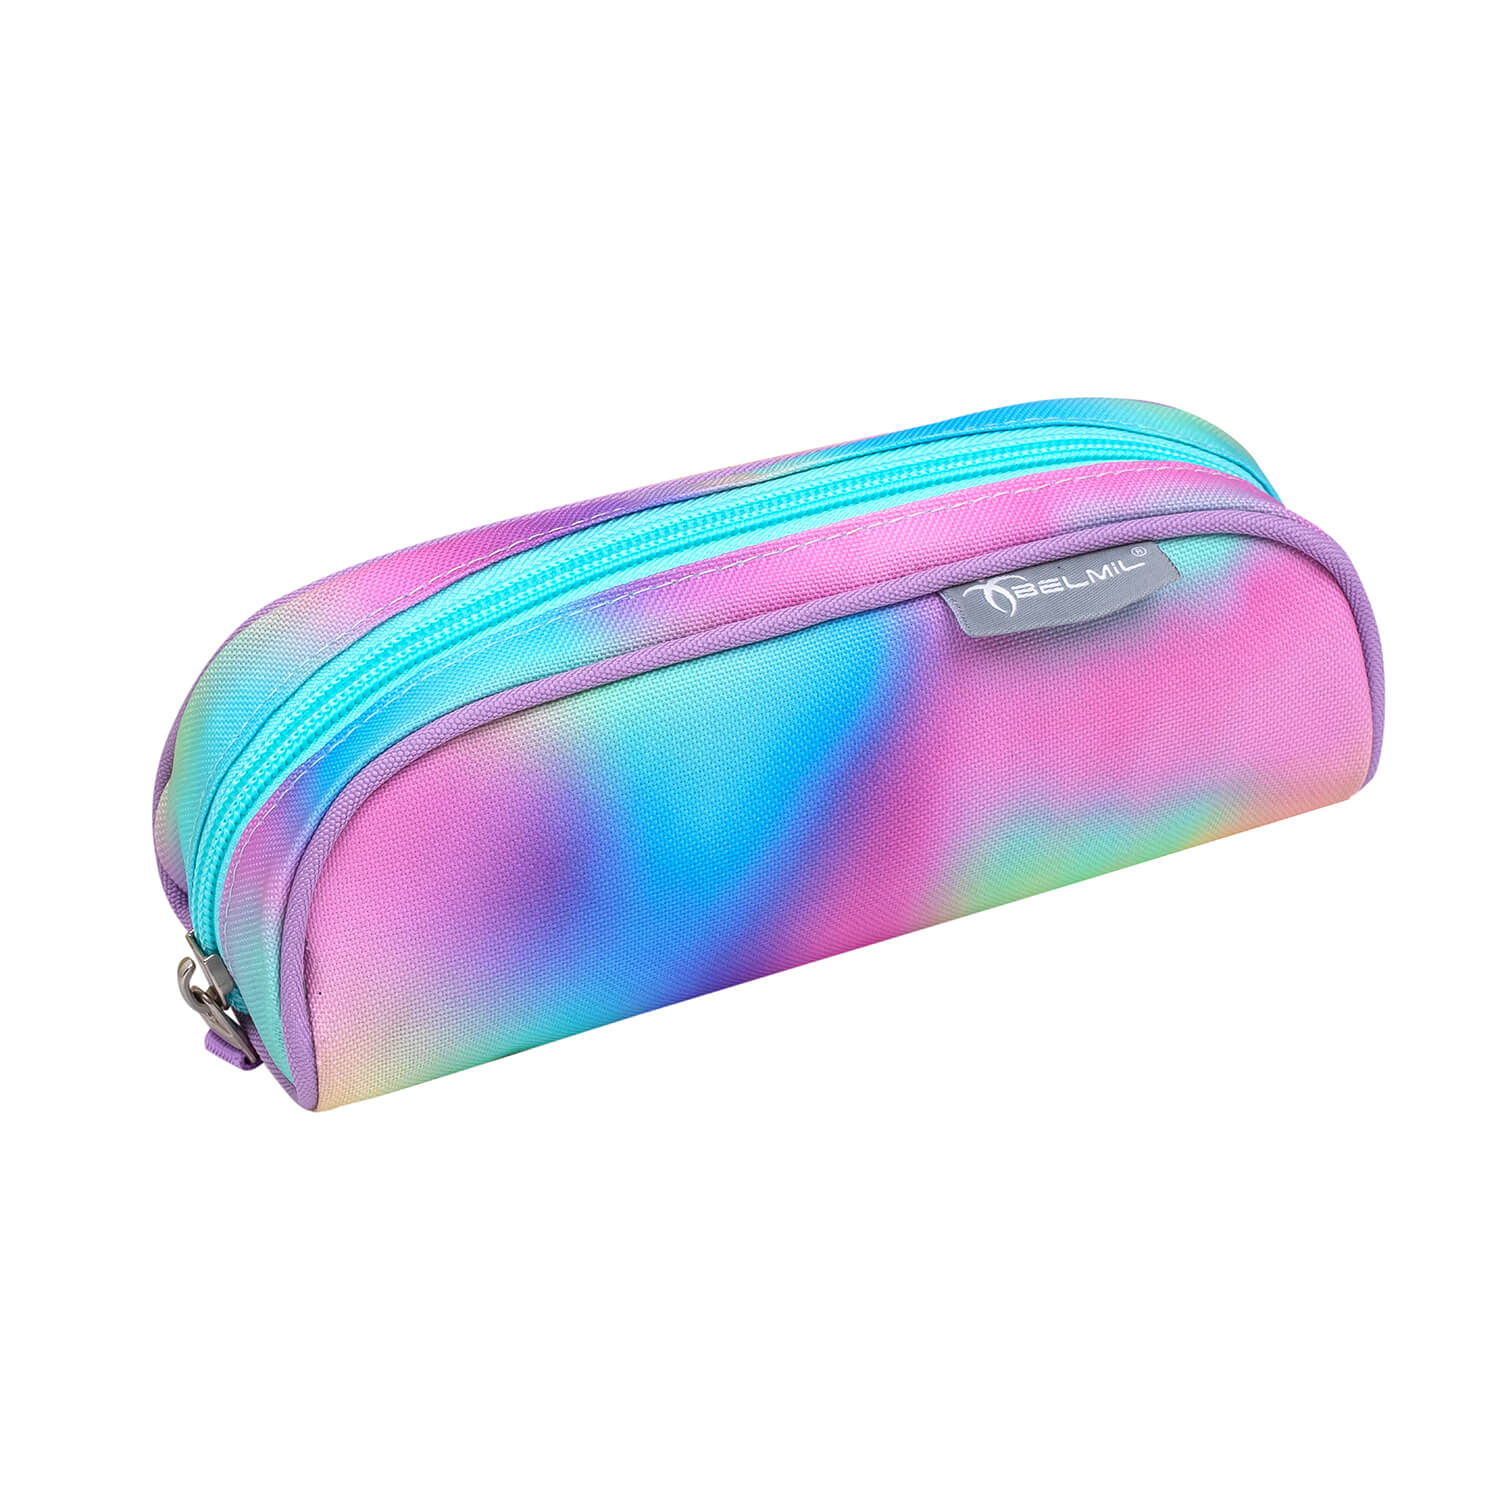 Smarty Rainbow Color schoolbag set 6 pcs